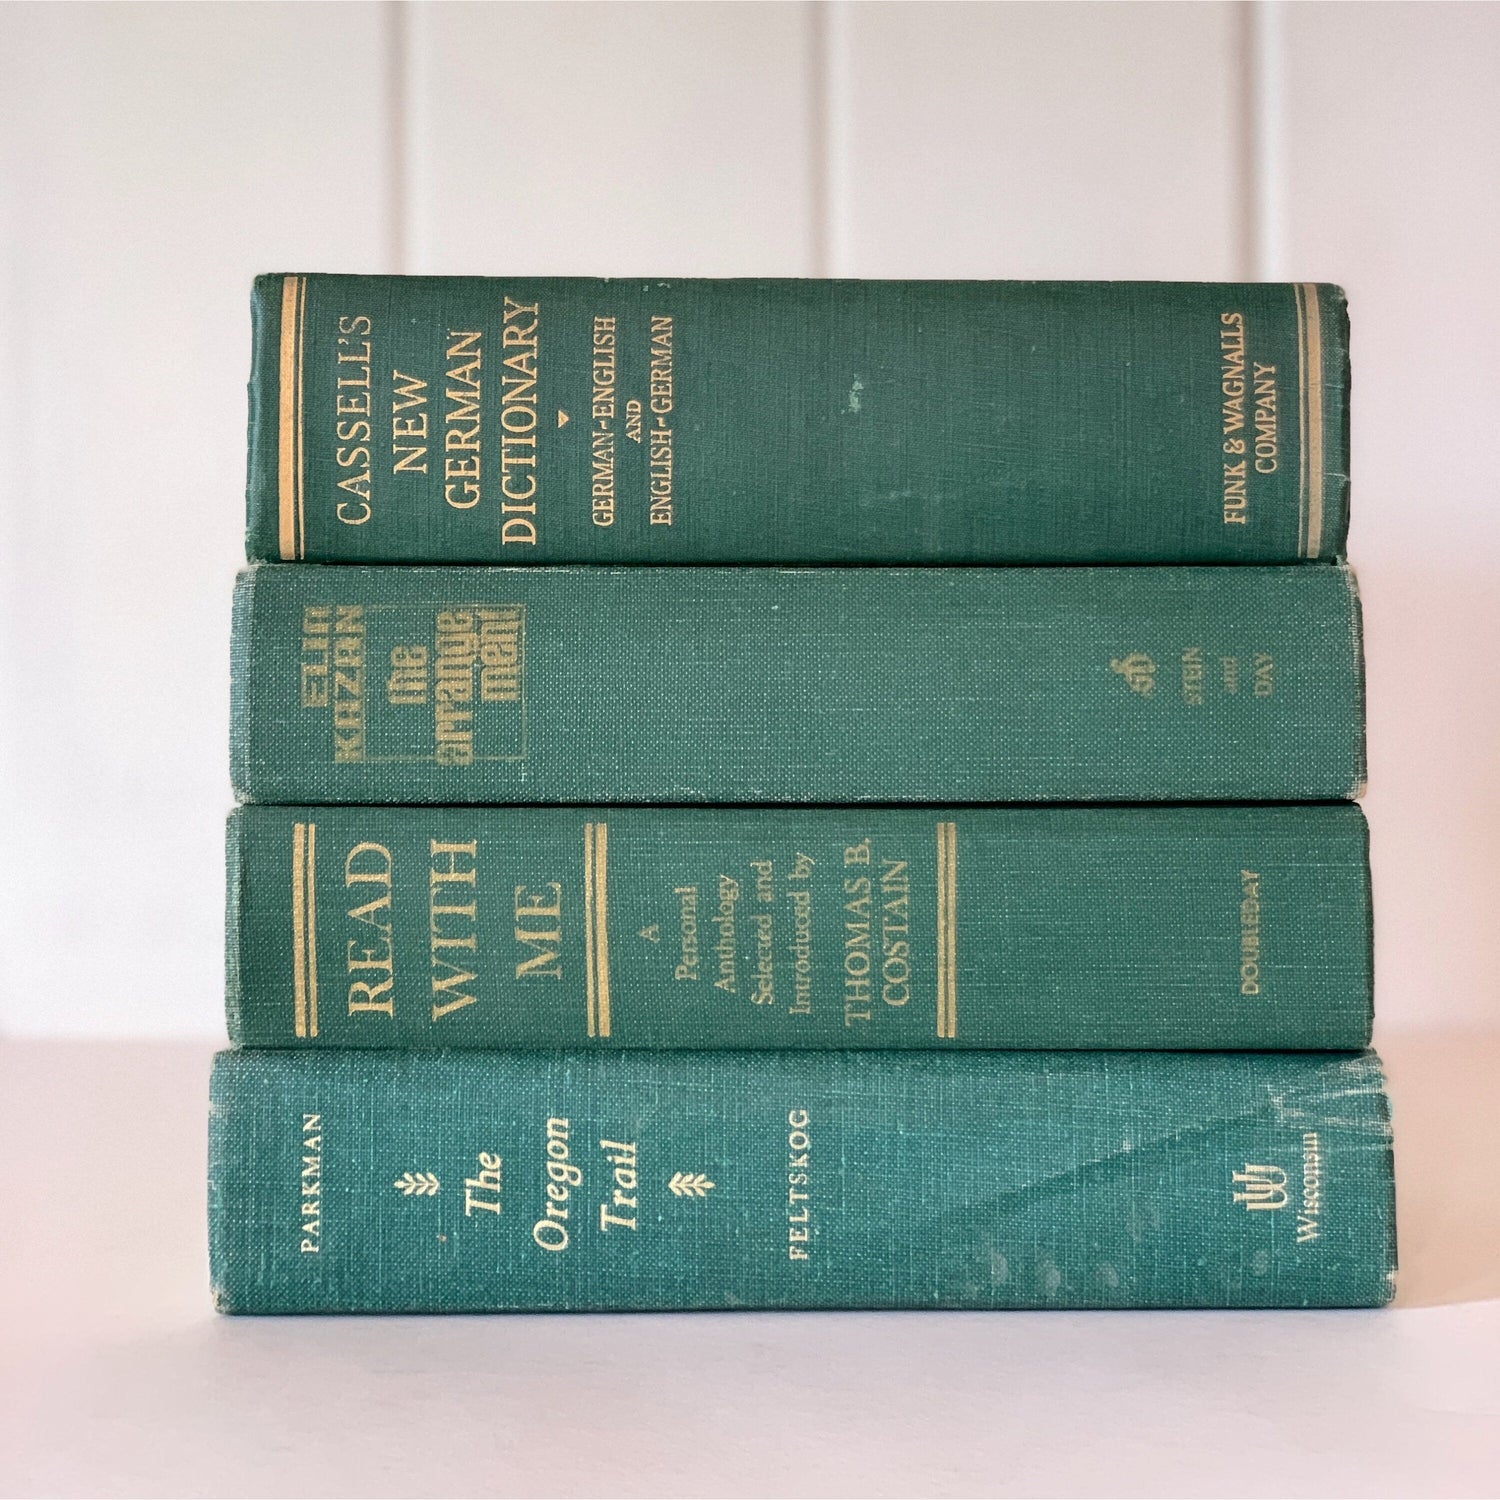 Vintage Hunter Green Books Book Bundle for Mid Century Modern Shelf Styling